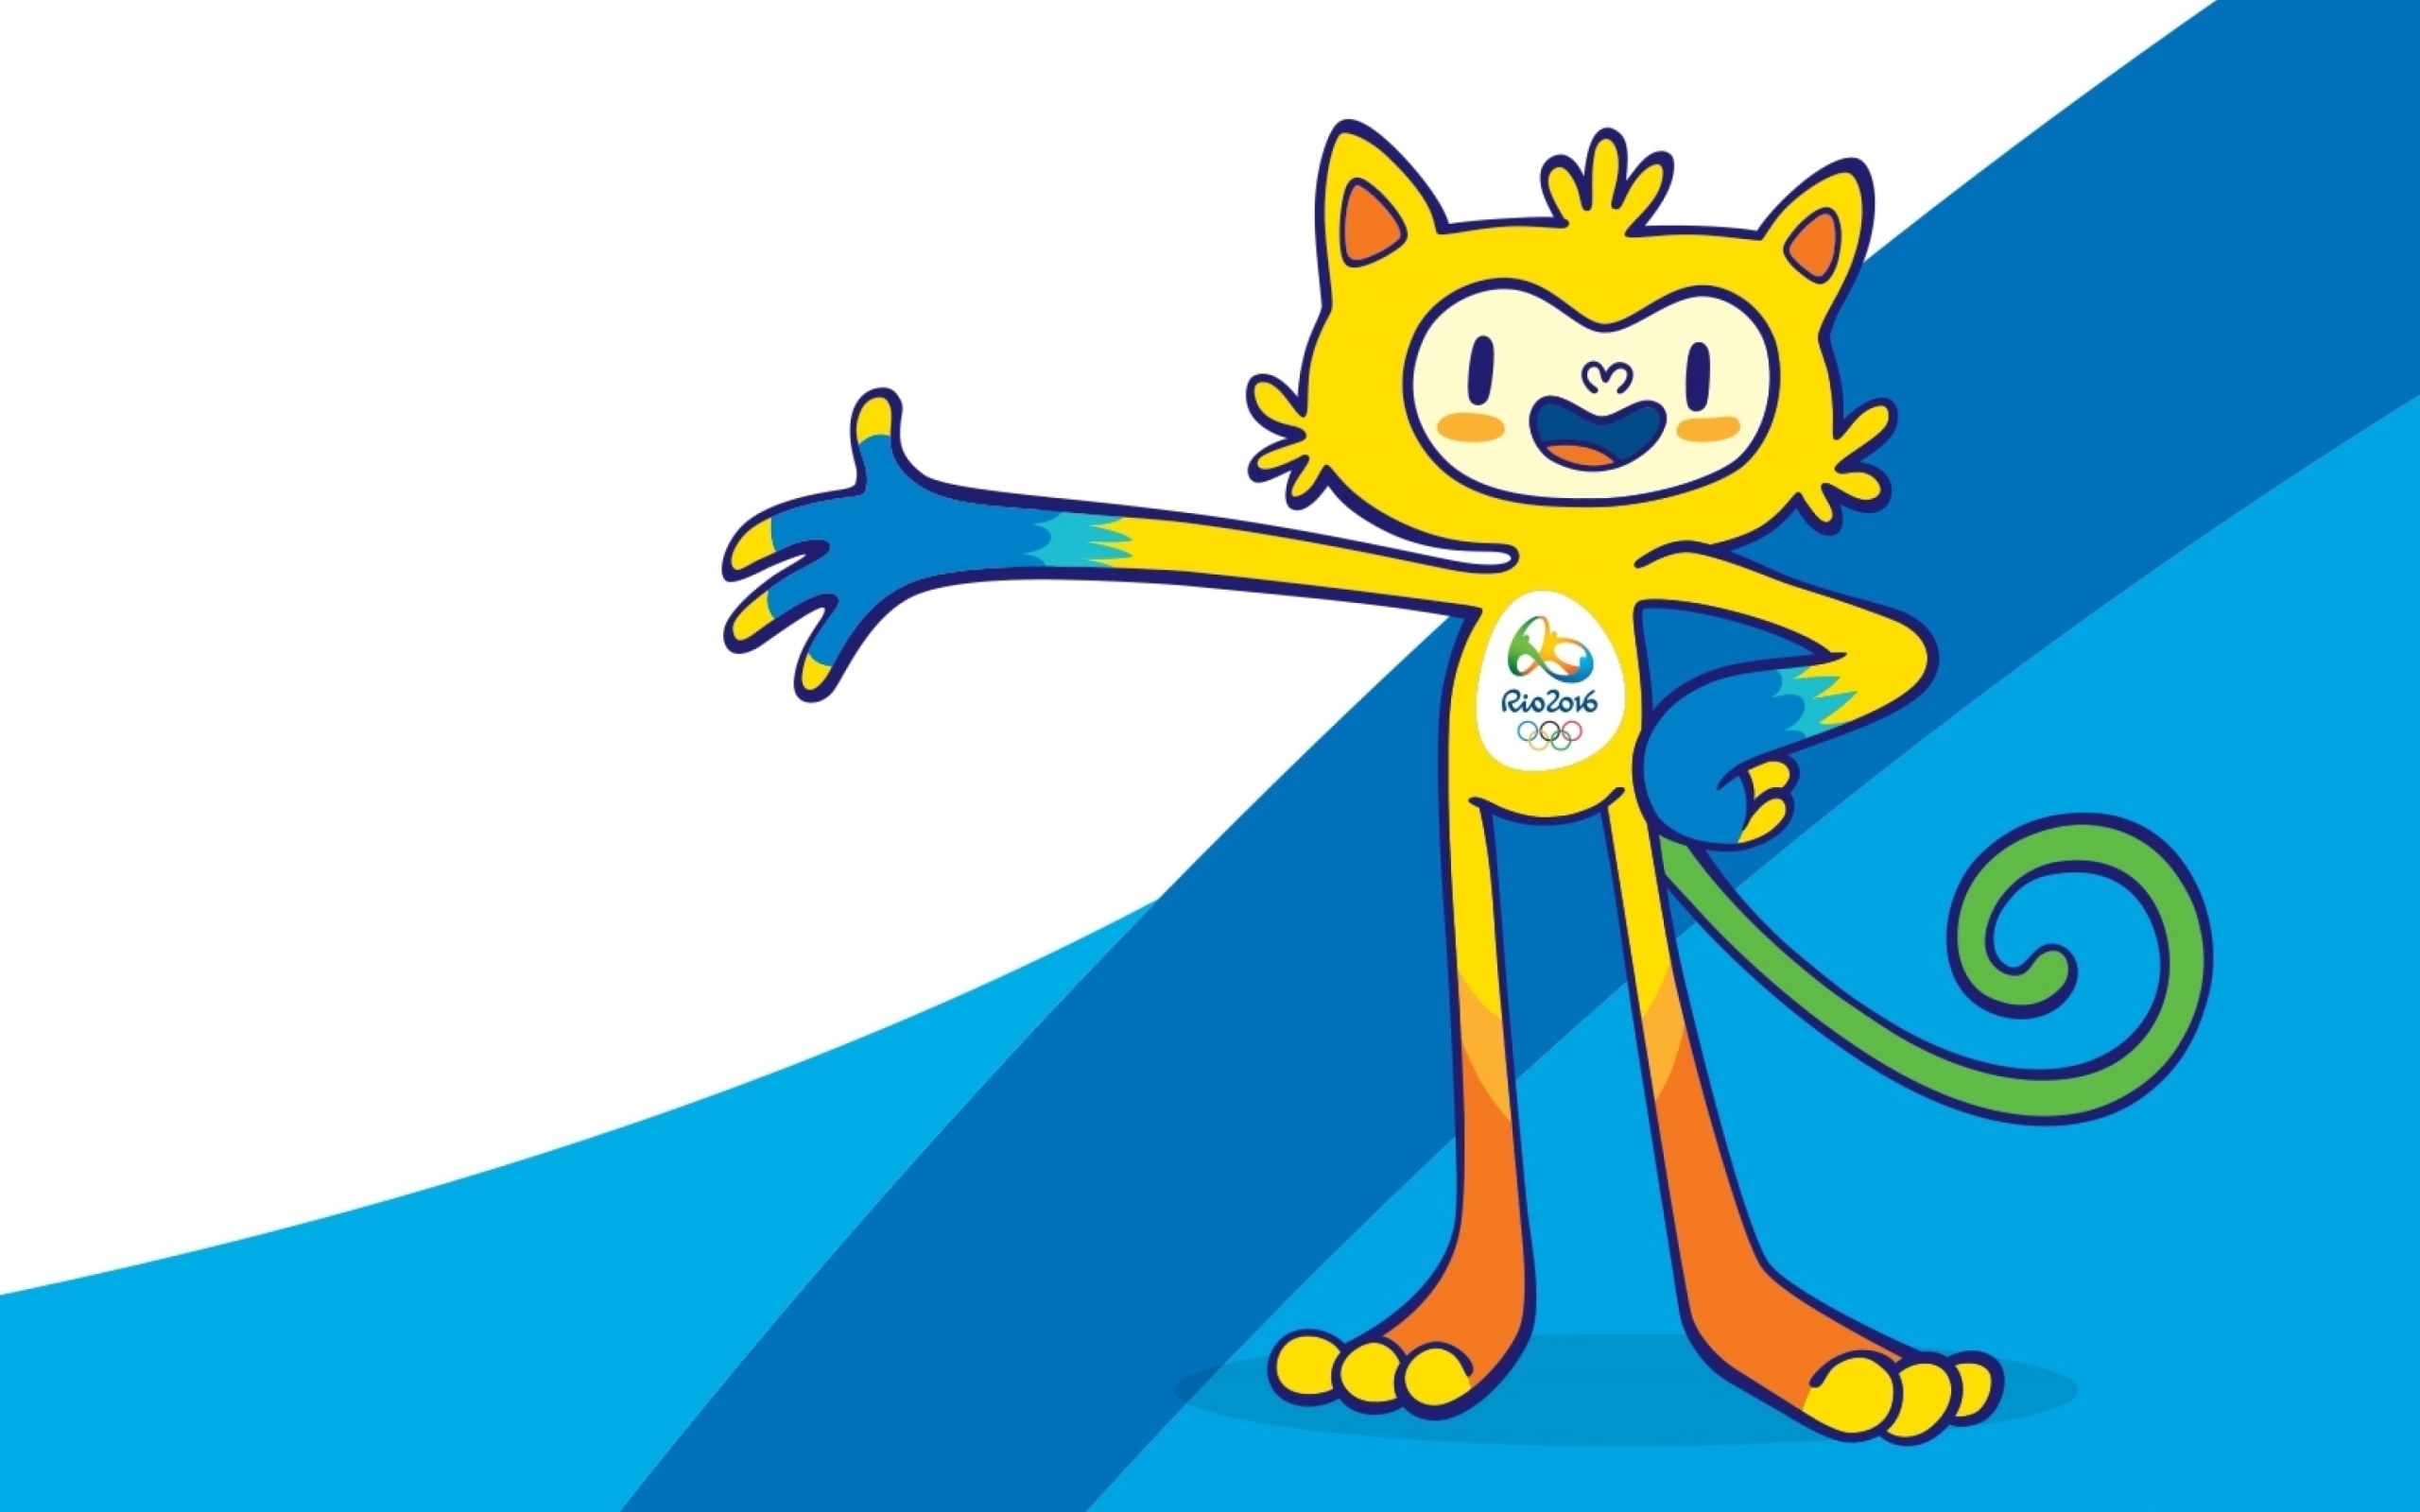 Olympics Mascot Vinicius Rio 2016 wallpaper 2560x1600